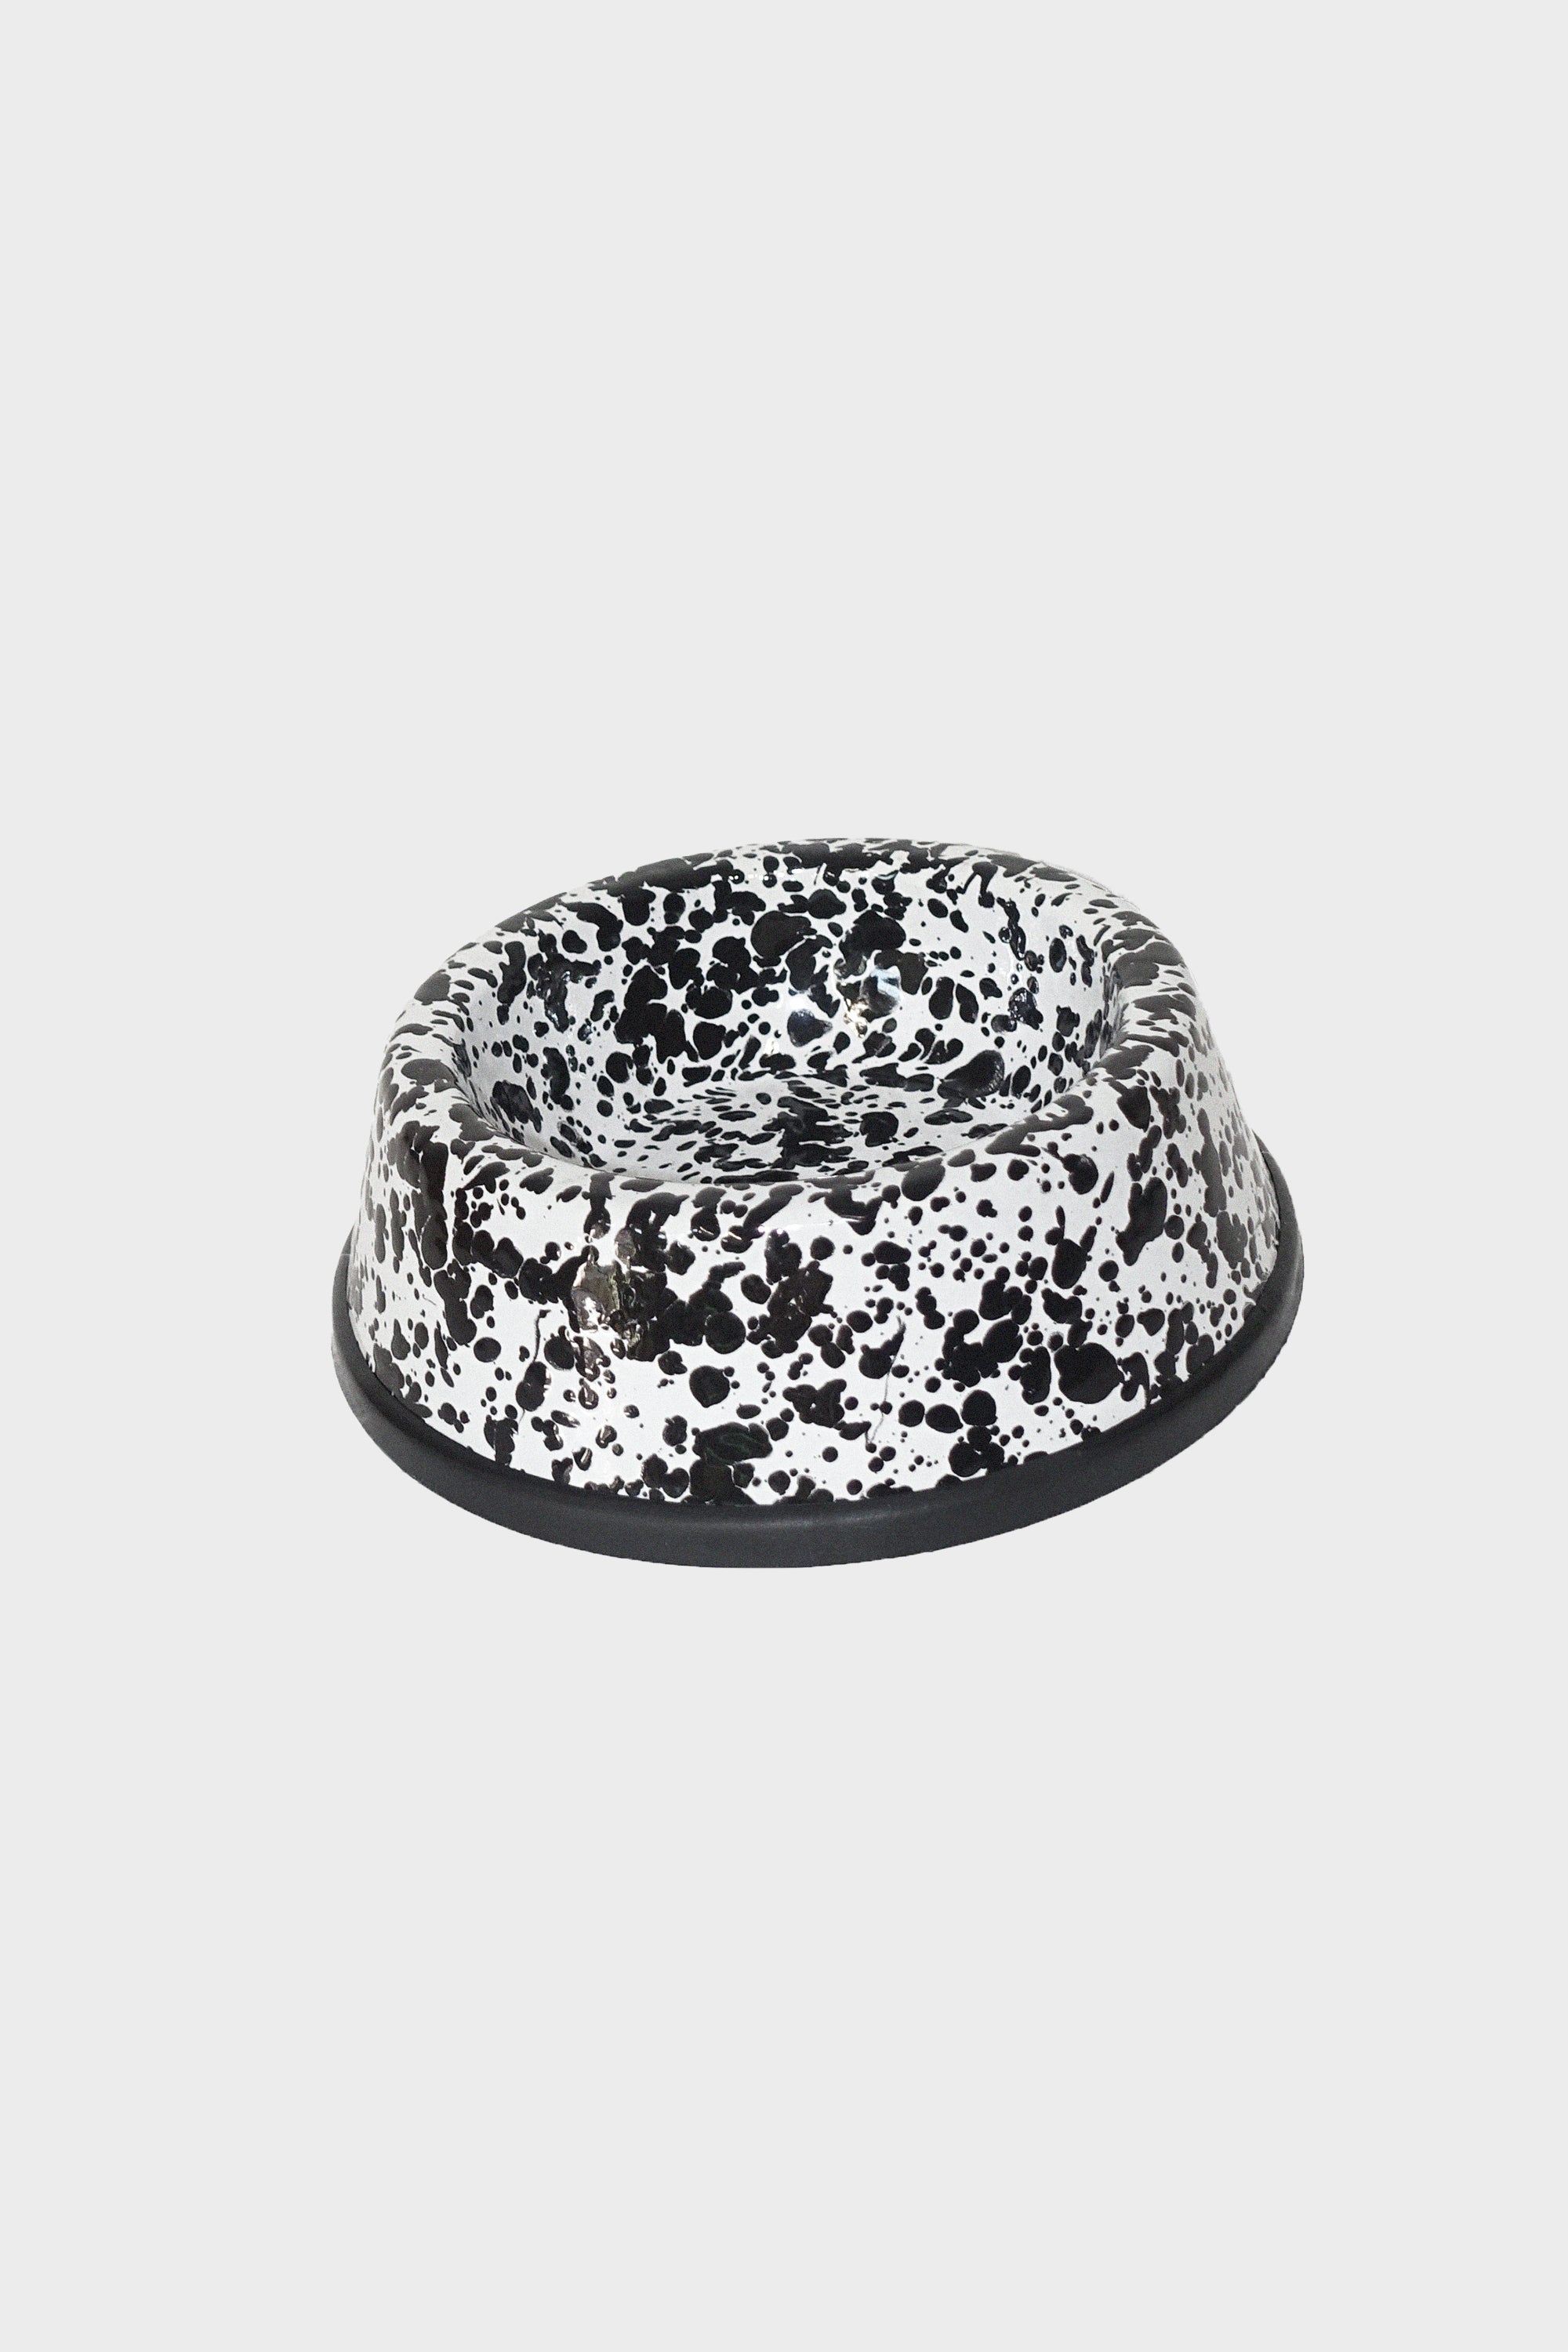 Small Pet Bowl in Black Splatter Enamelware